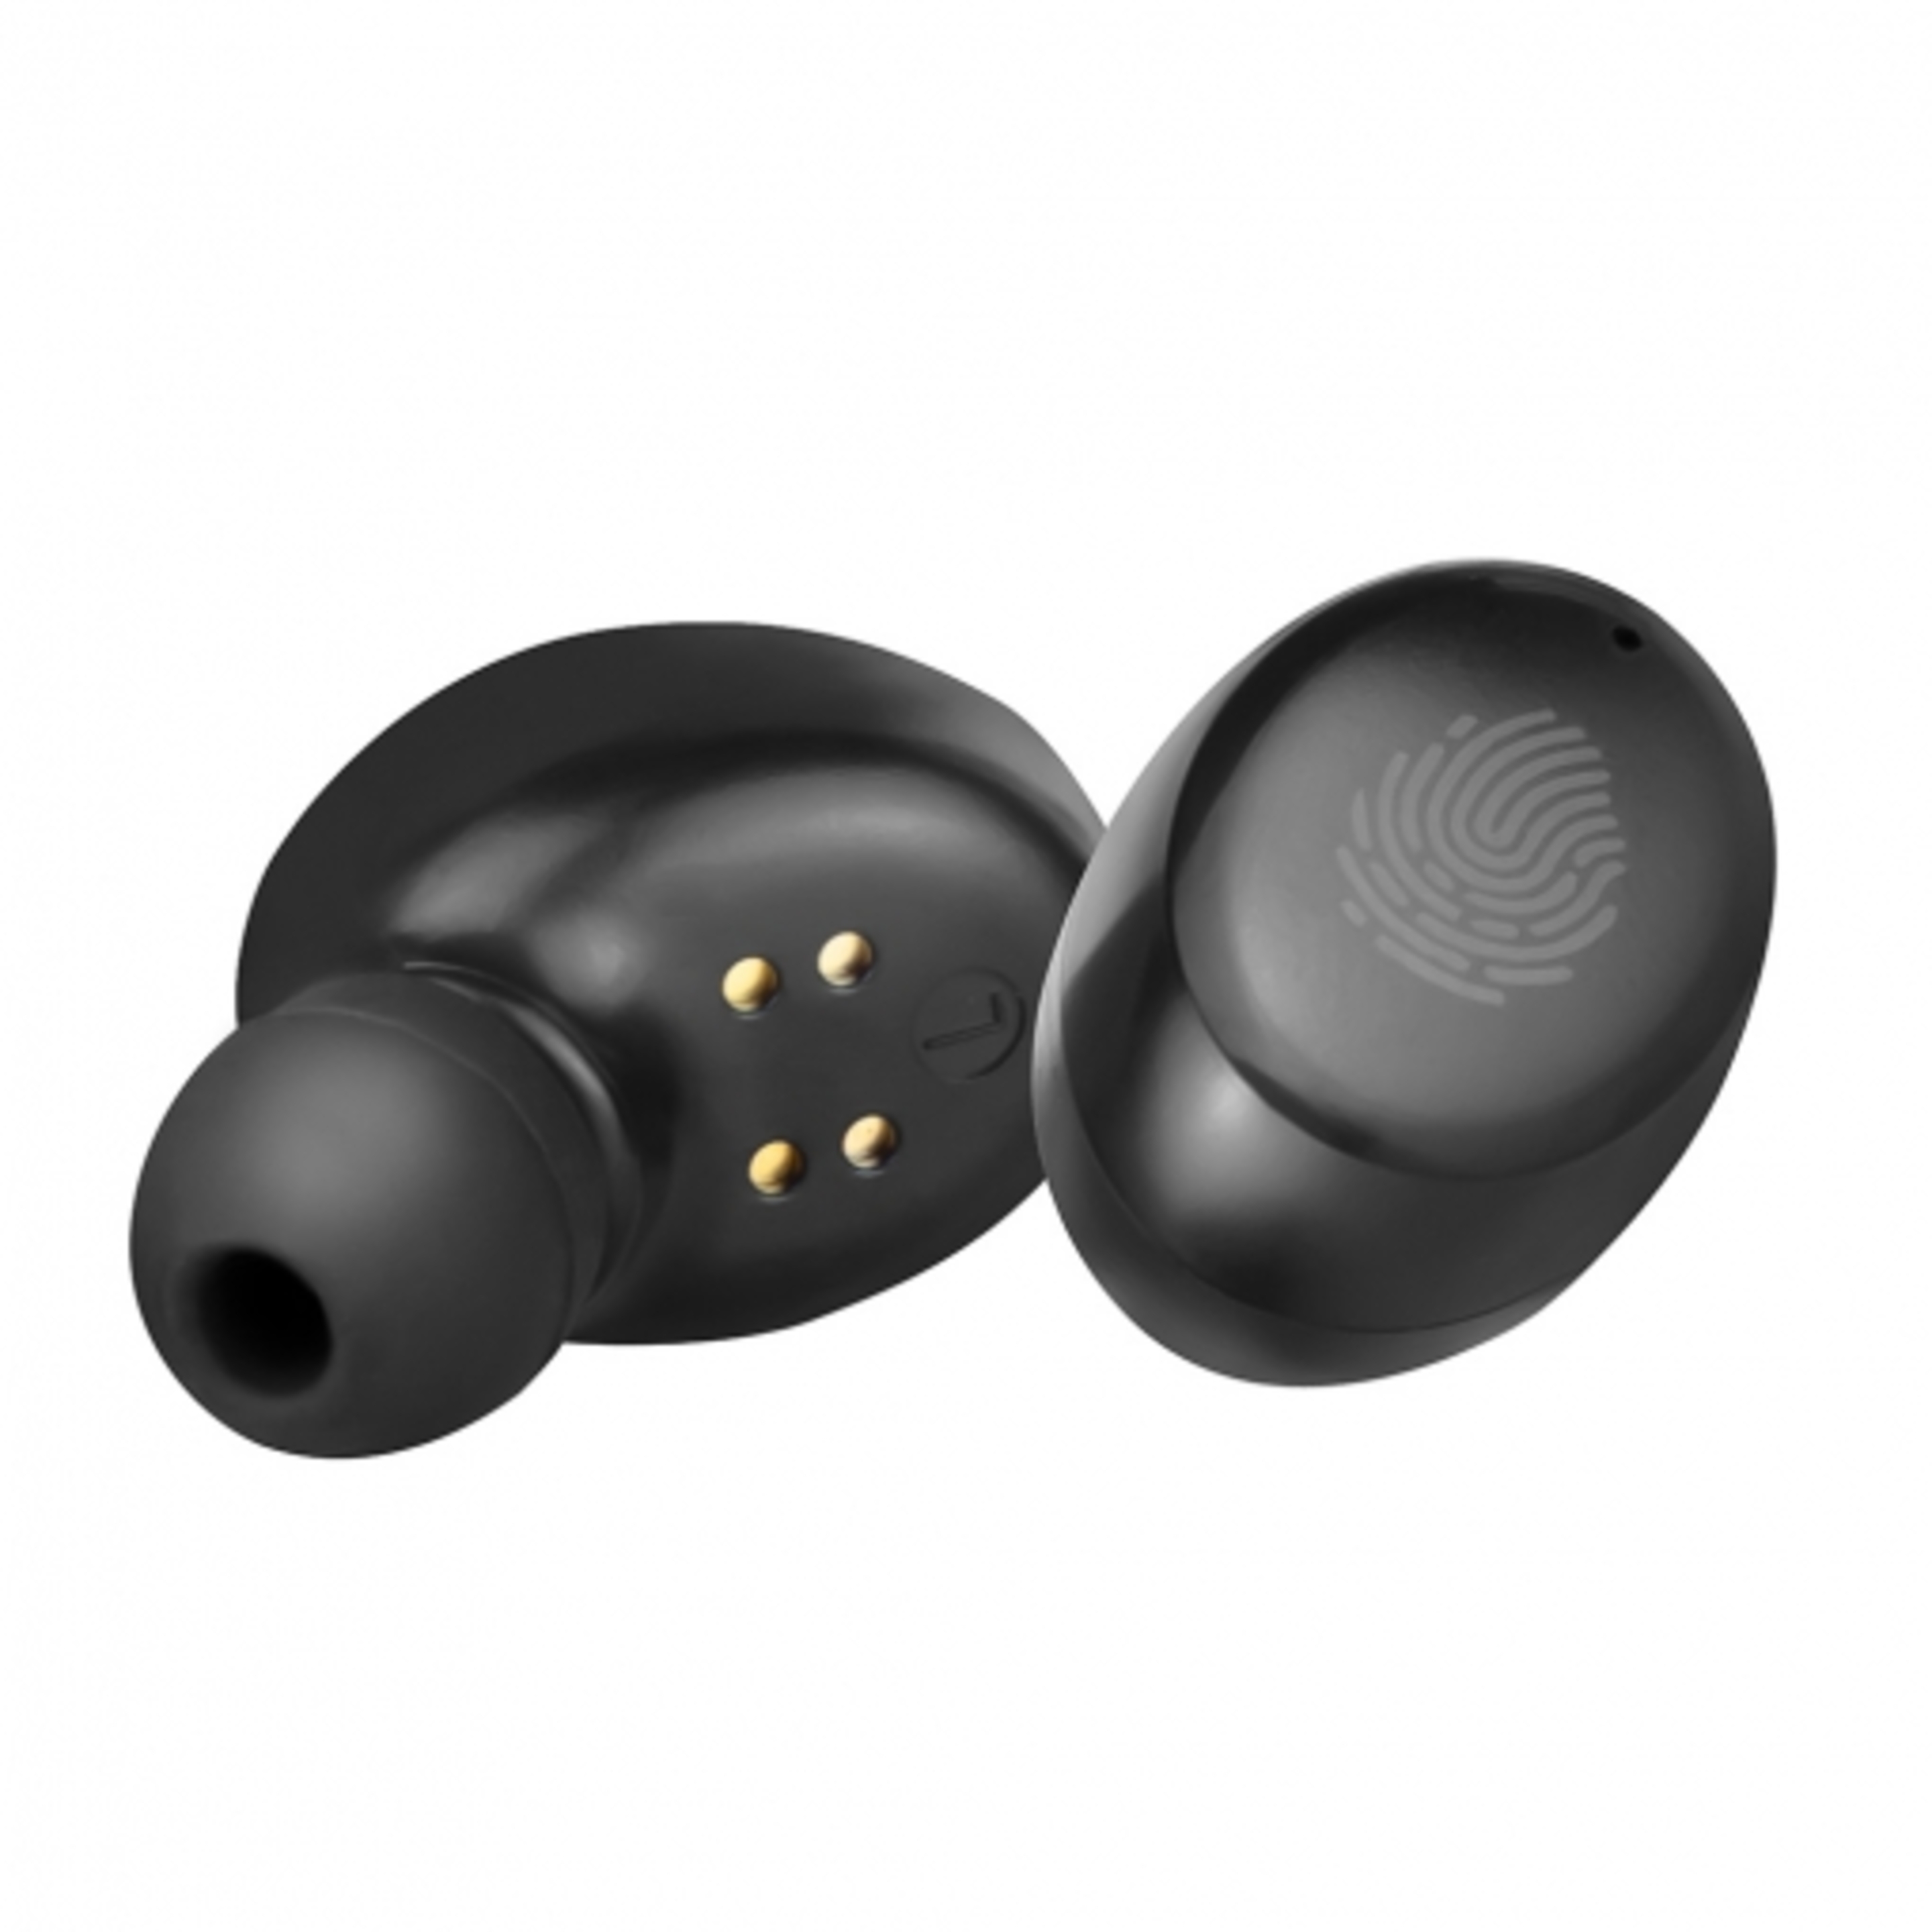 Auriculares Bluetooth / Power Bank Smartek Tws-590